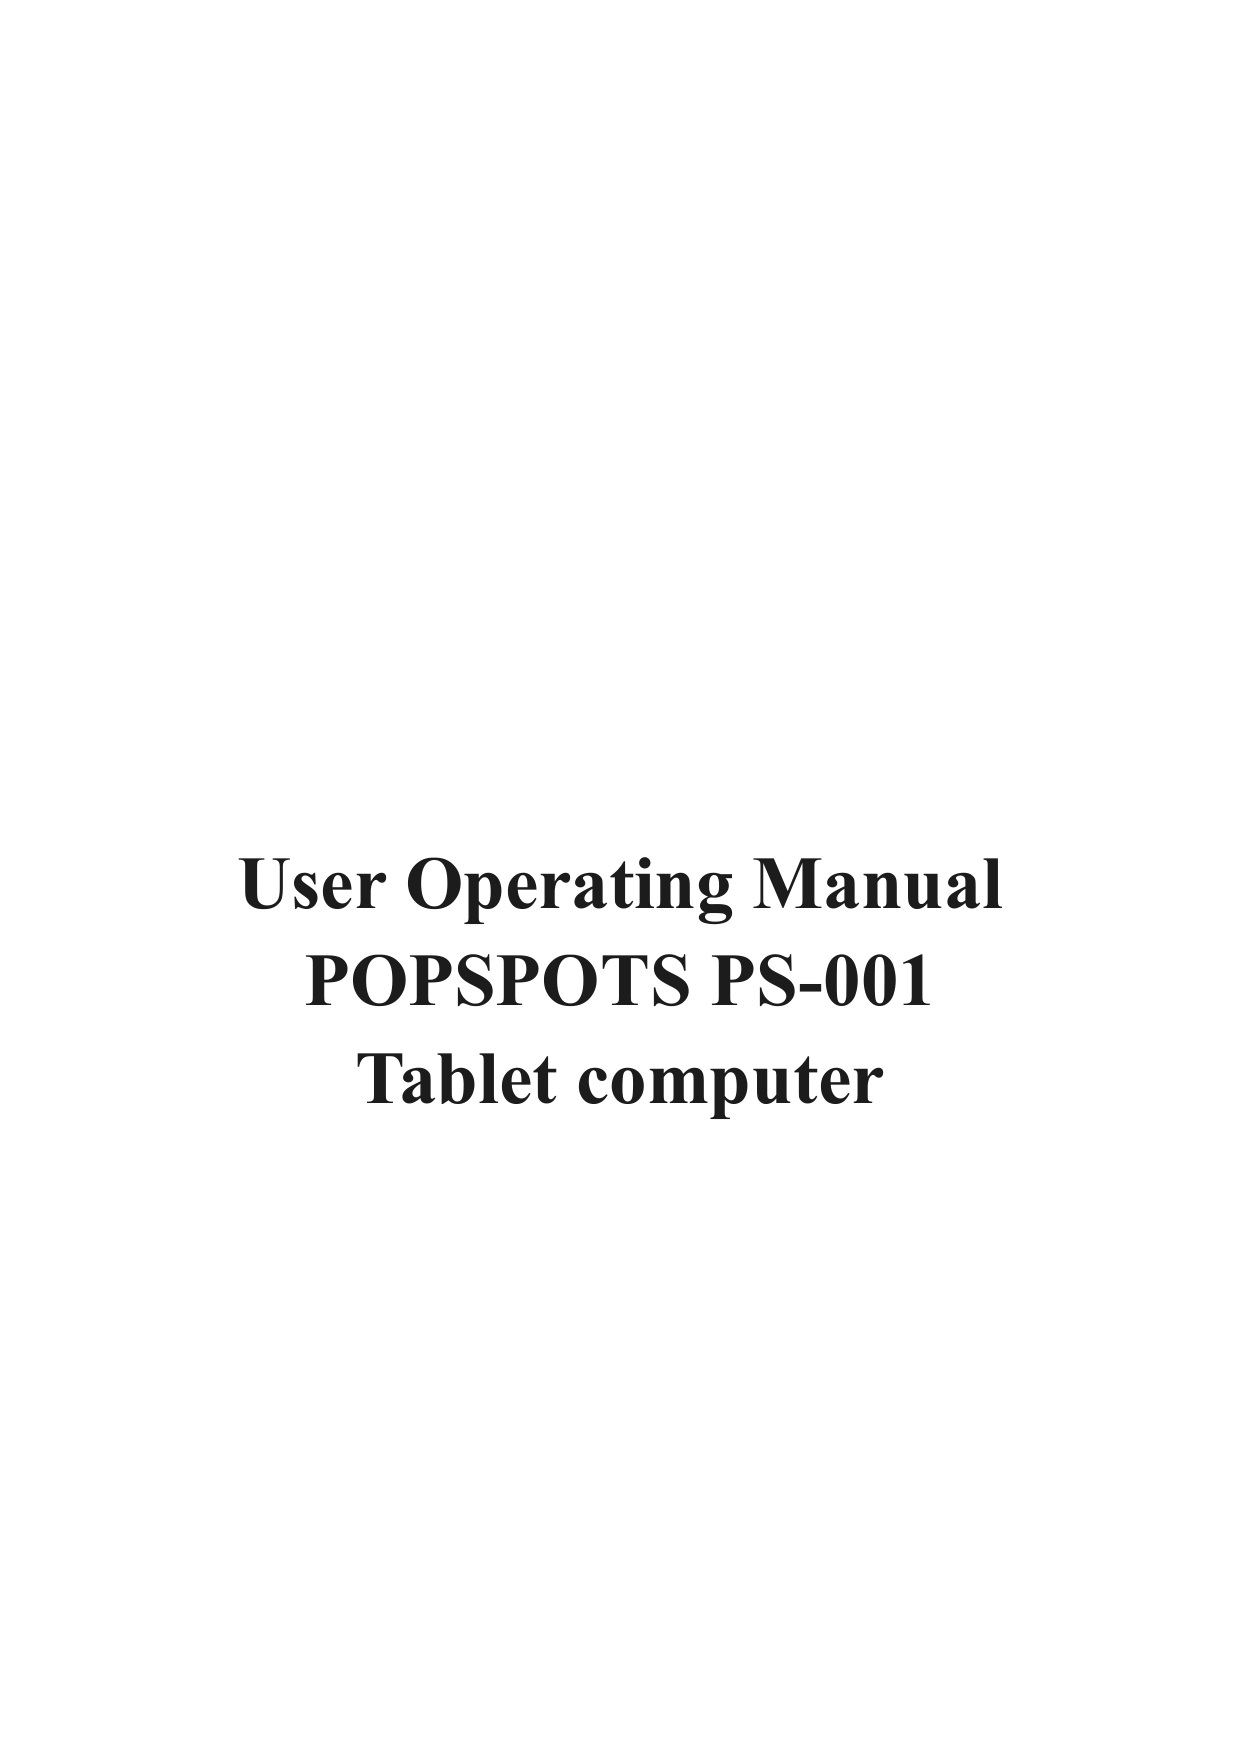            User Operating Manual   POPSPOTS PS-001 Tablet computer      